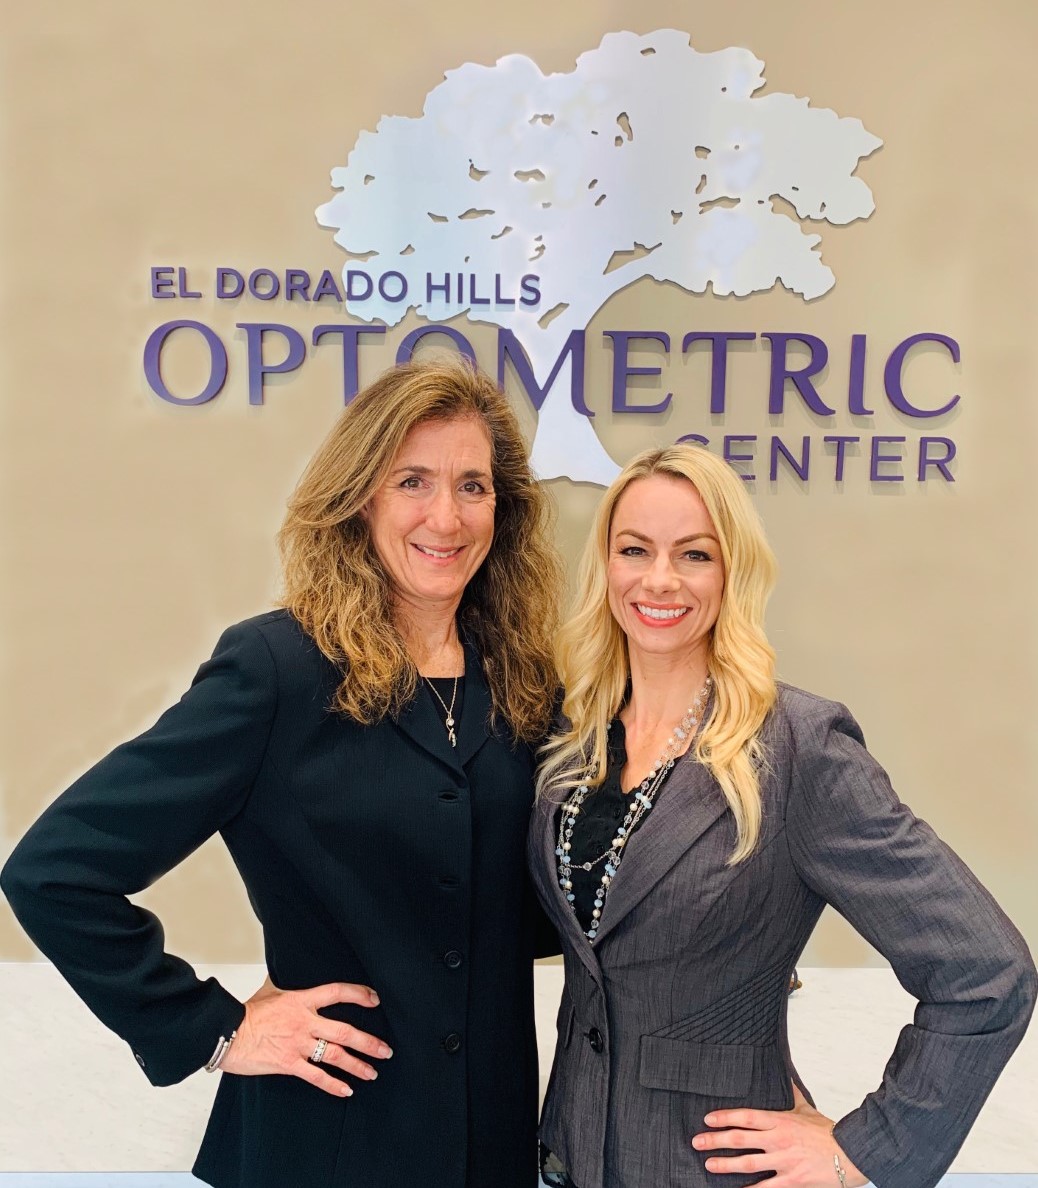 El Dorado Hills Optometric Center